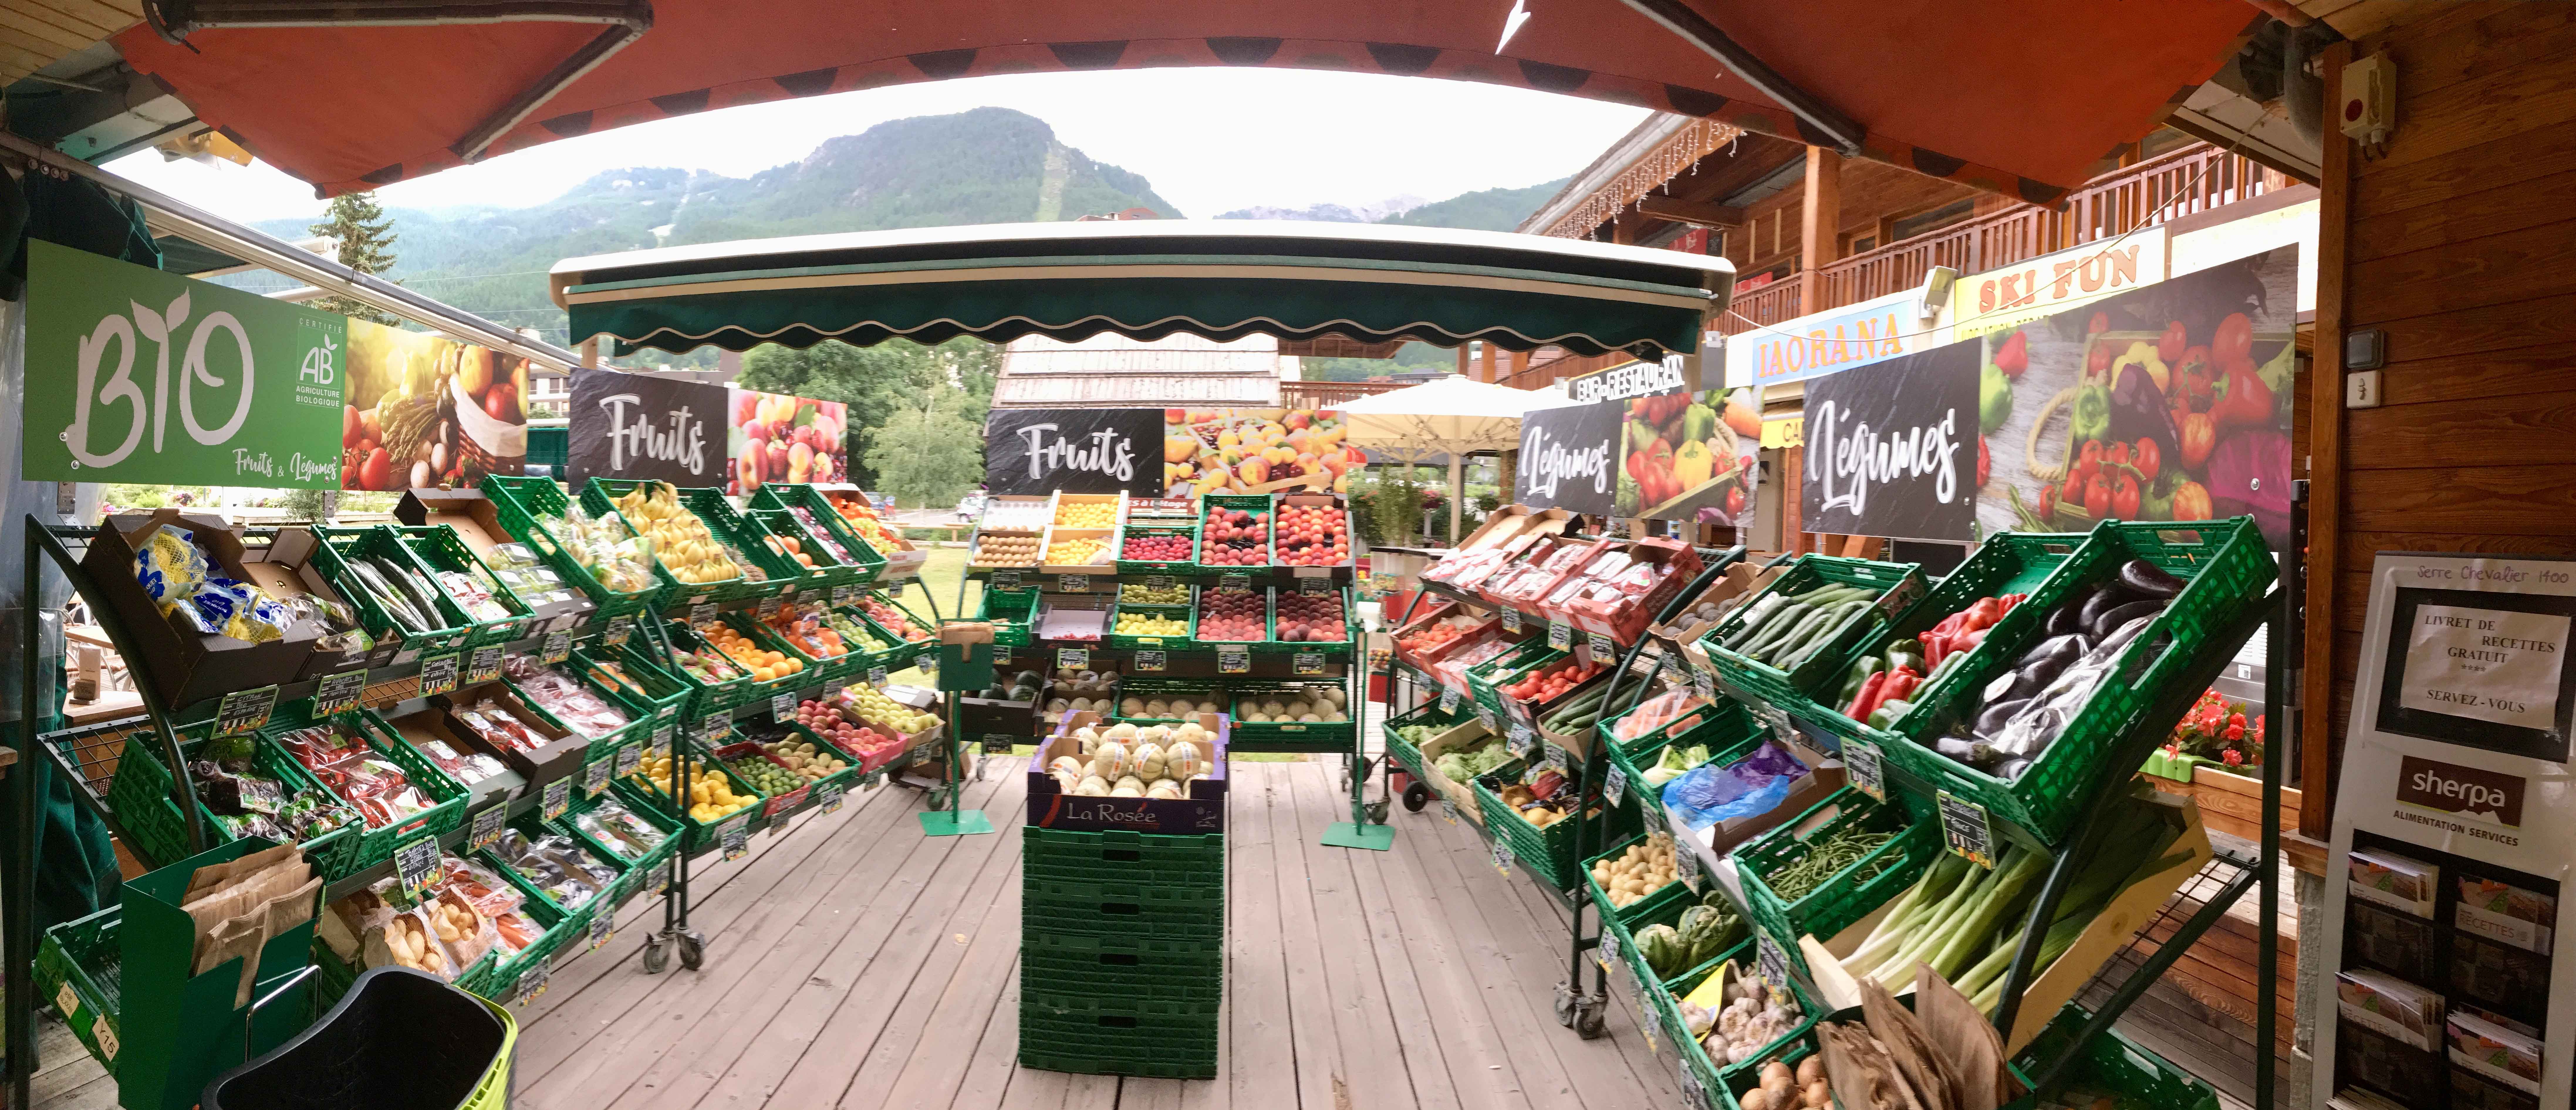 Sherpa supermarket Serre Chevalier 1400 fruits and vegetables